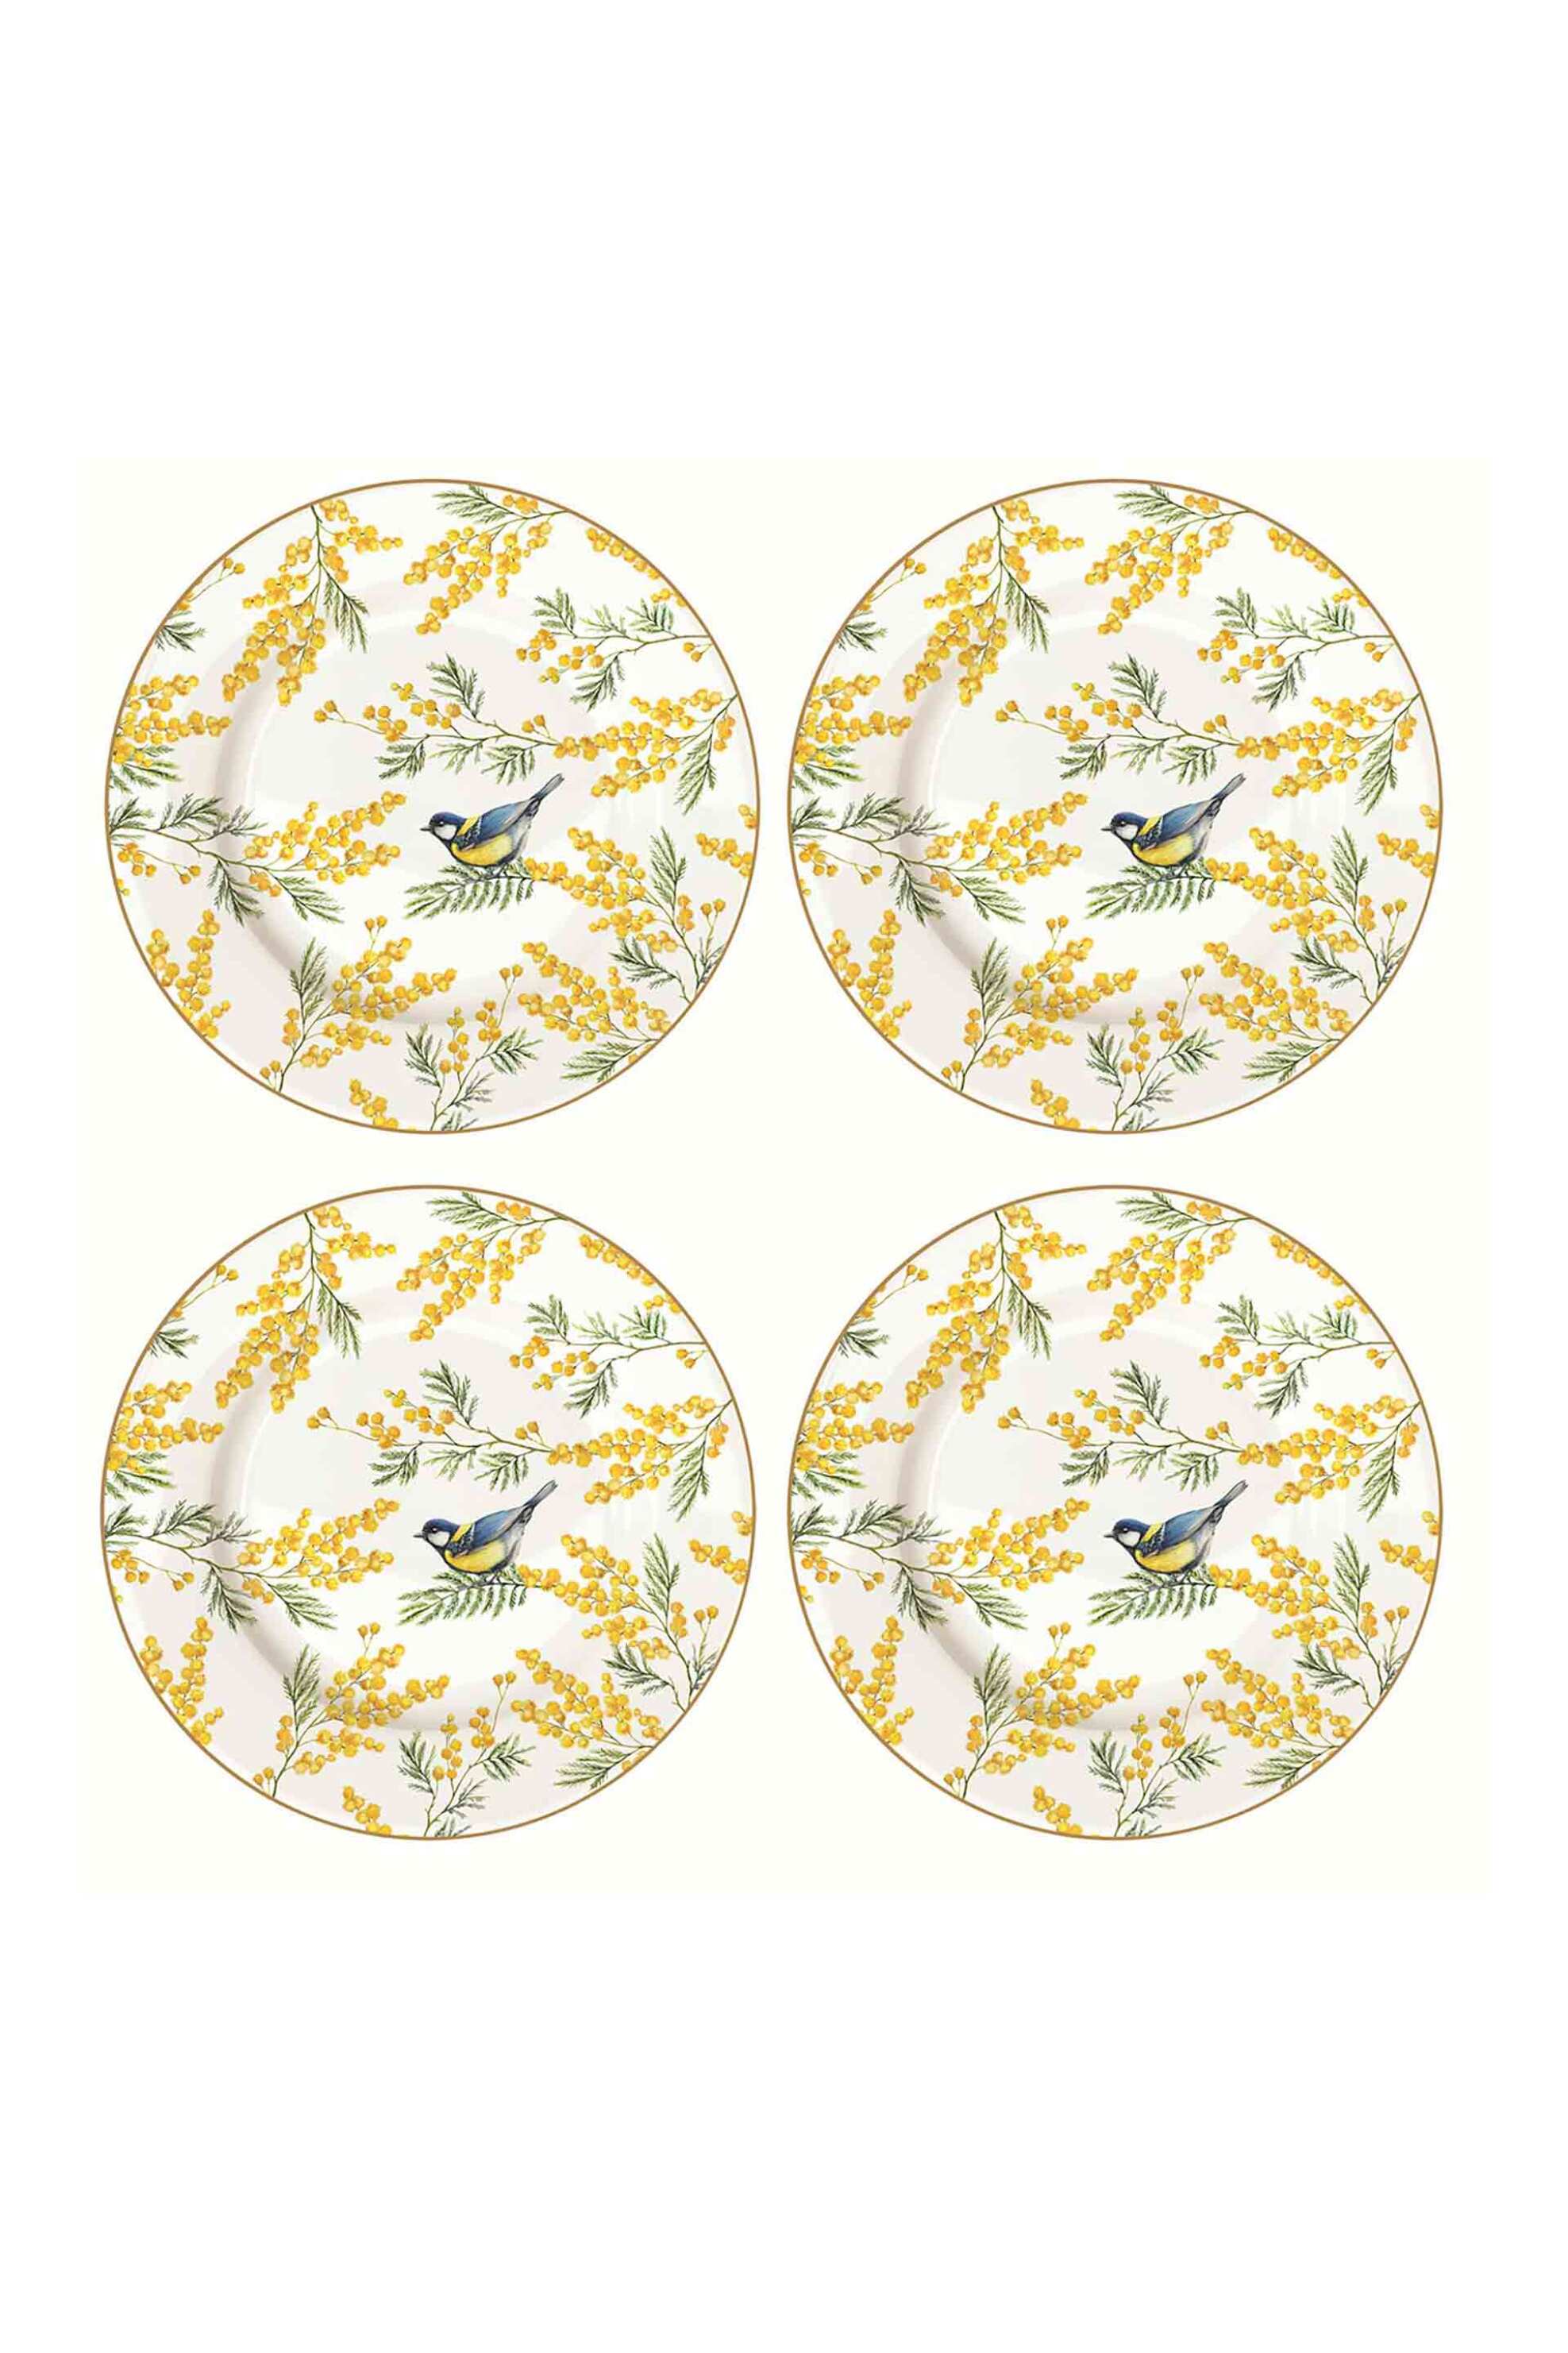 Home > ΚΟΥΖΙΝΑ > Πιάτα & Σερβίτσια DOMUS HOMUS σετ πορσελάνινα πιάτα γλυκού με κίτρινα λουλούδια και μπλε πουλί "Mimosa" 19 cm (4 τεμάχια) - 20-07-228